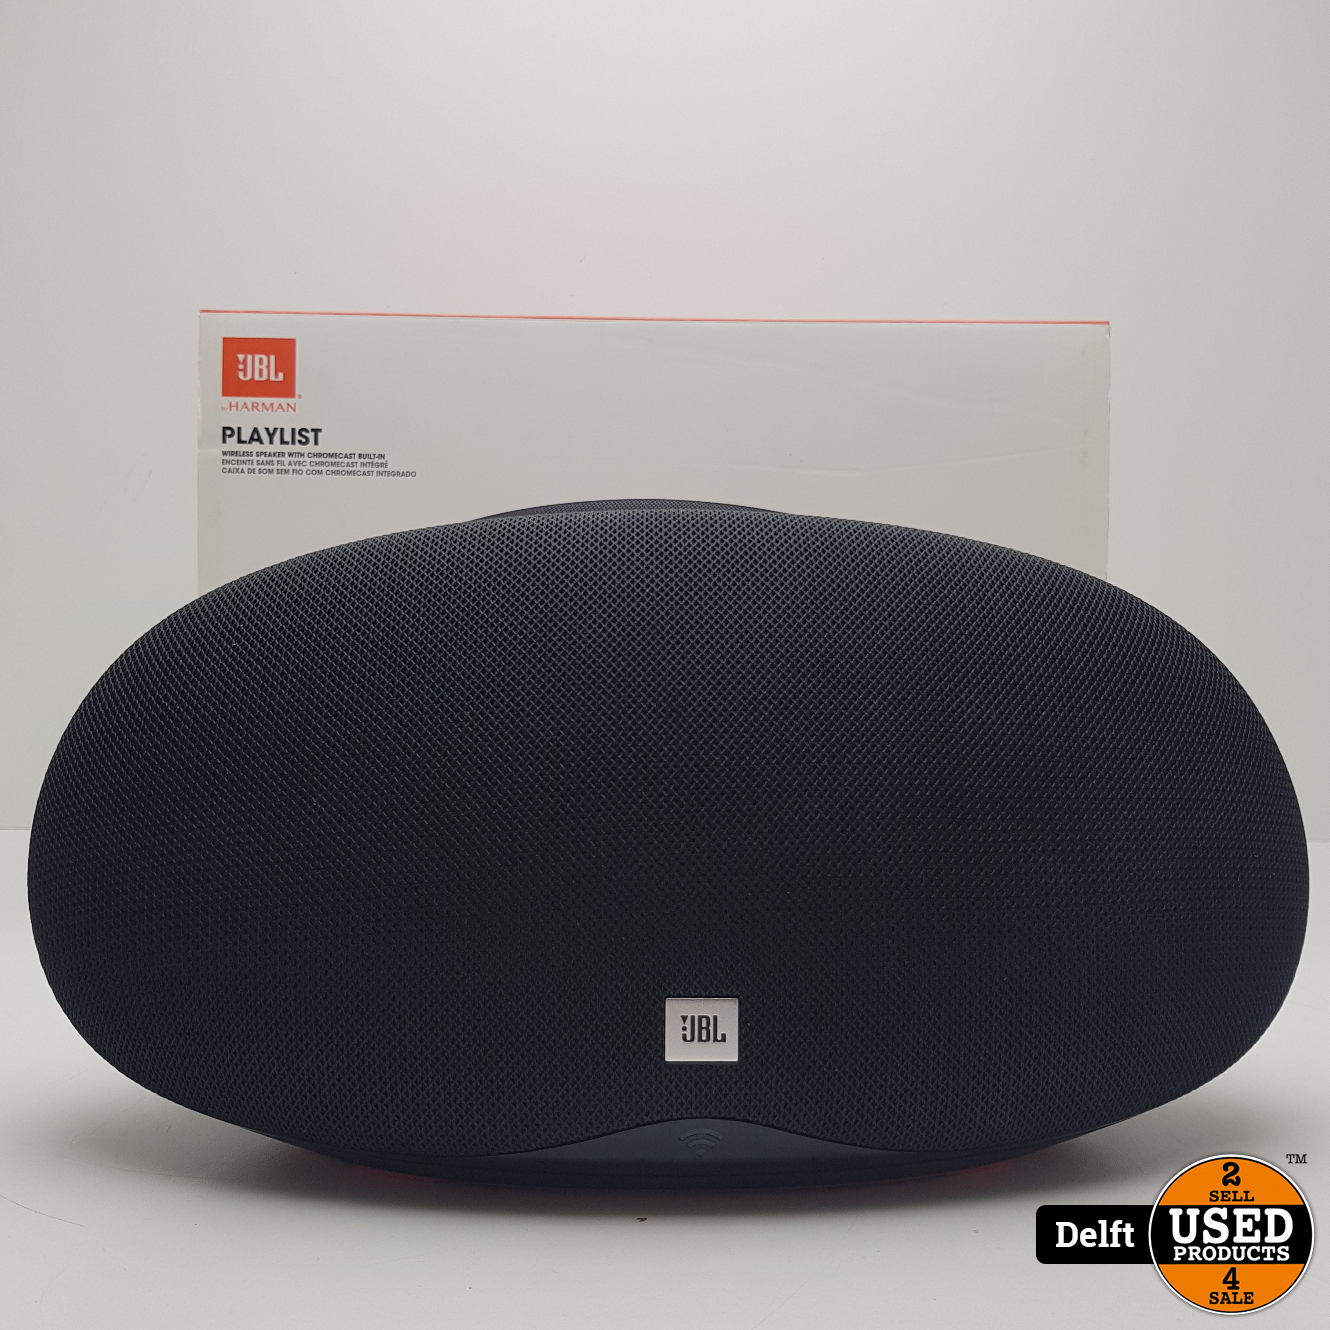 Playlist Bluetooth speaker nette staat Garantie - Used Products Delft